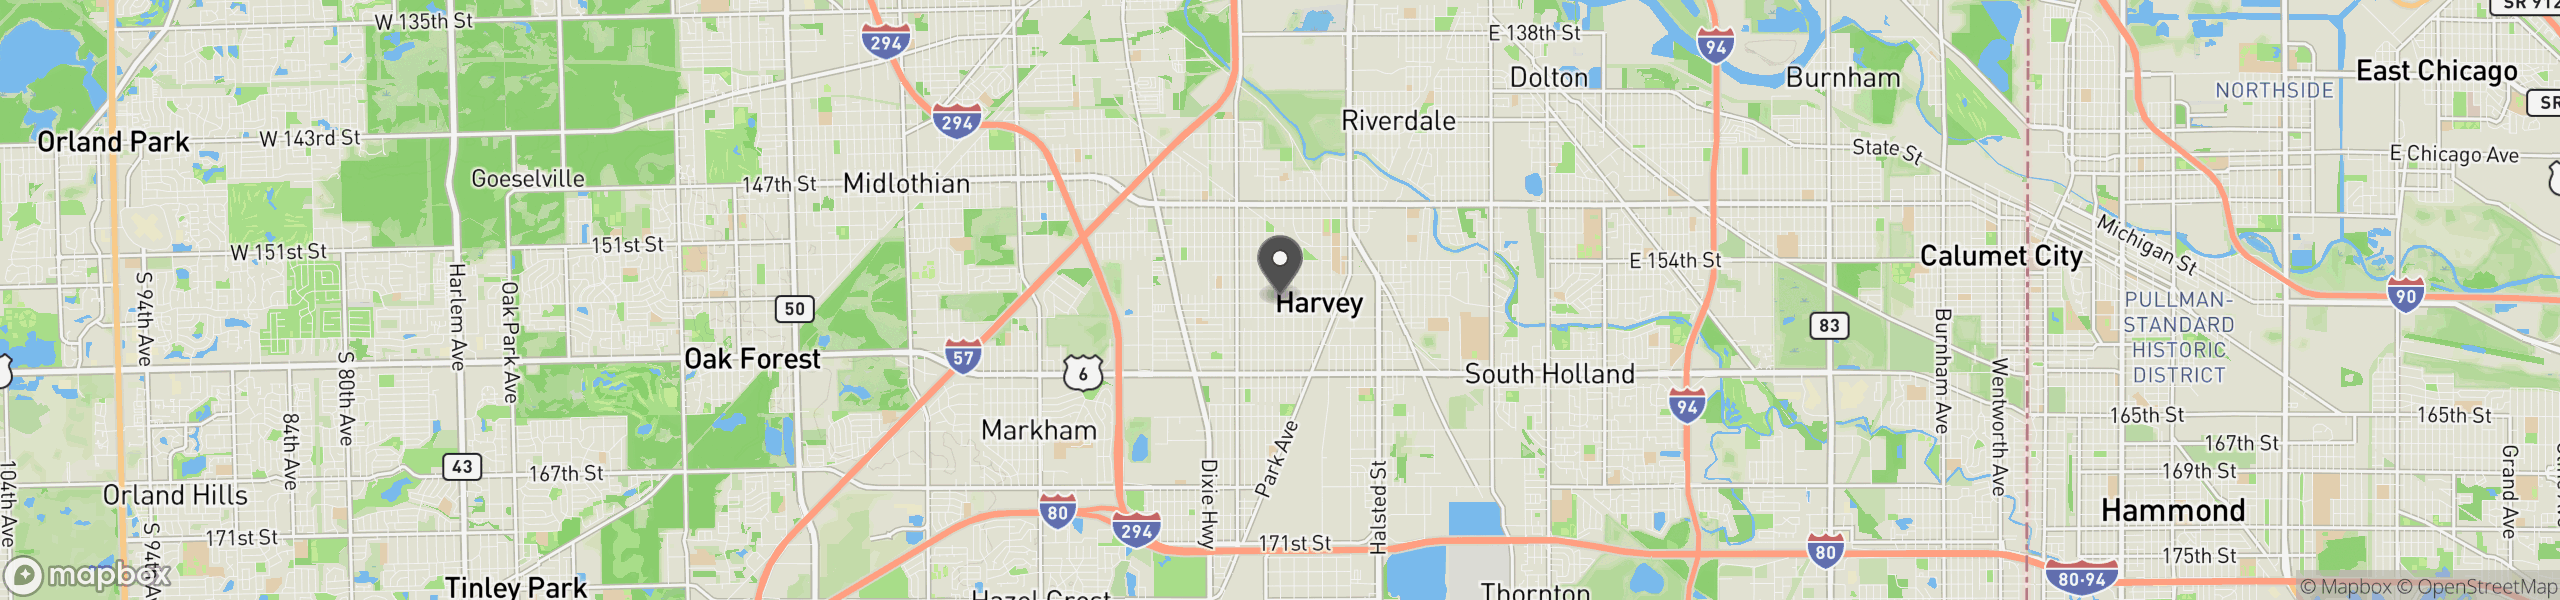 Harvey, IL